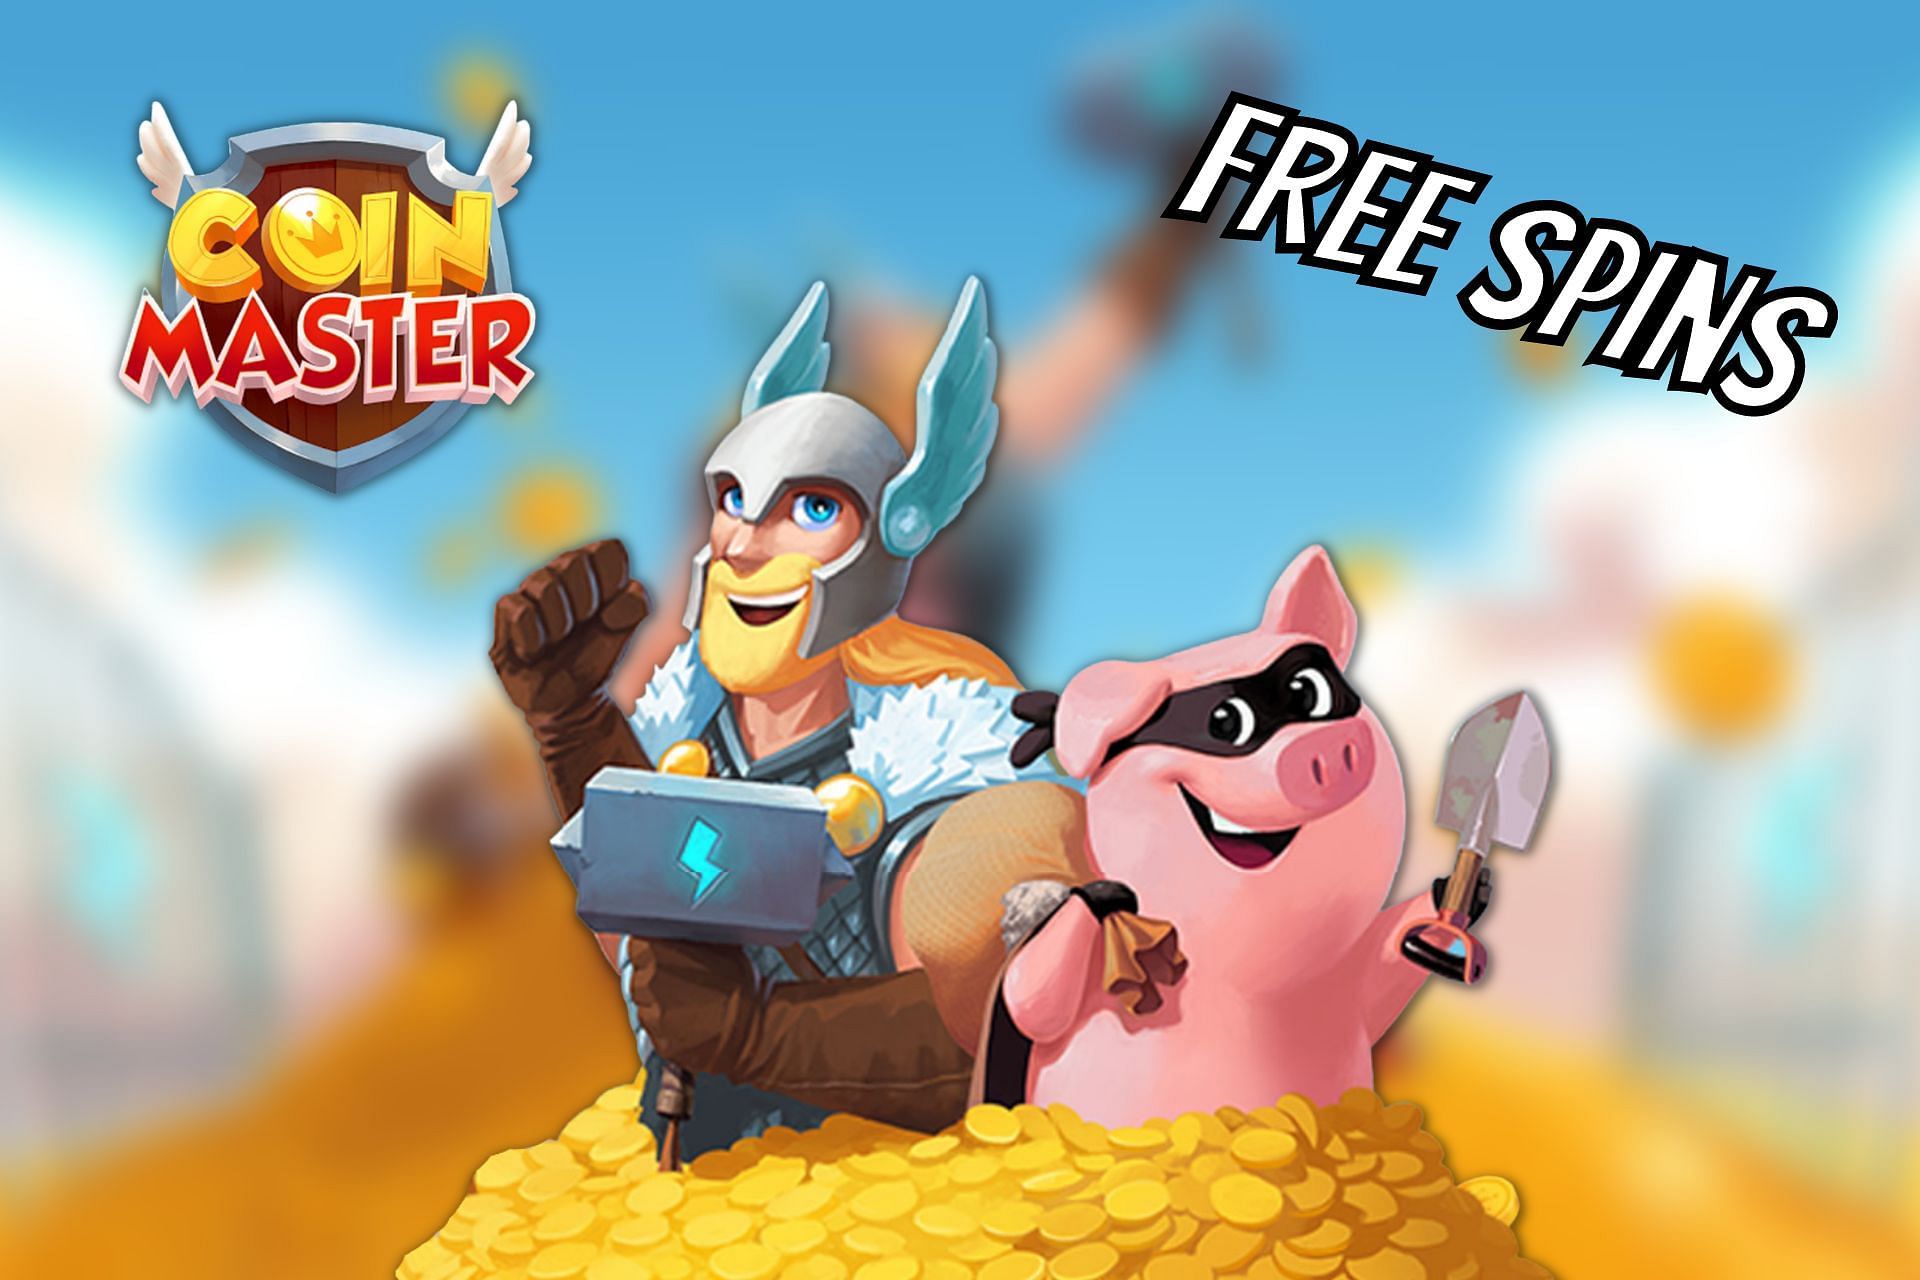 Coin Master free spins reward link (April 1)